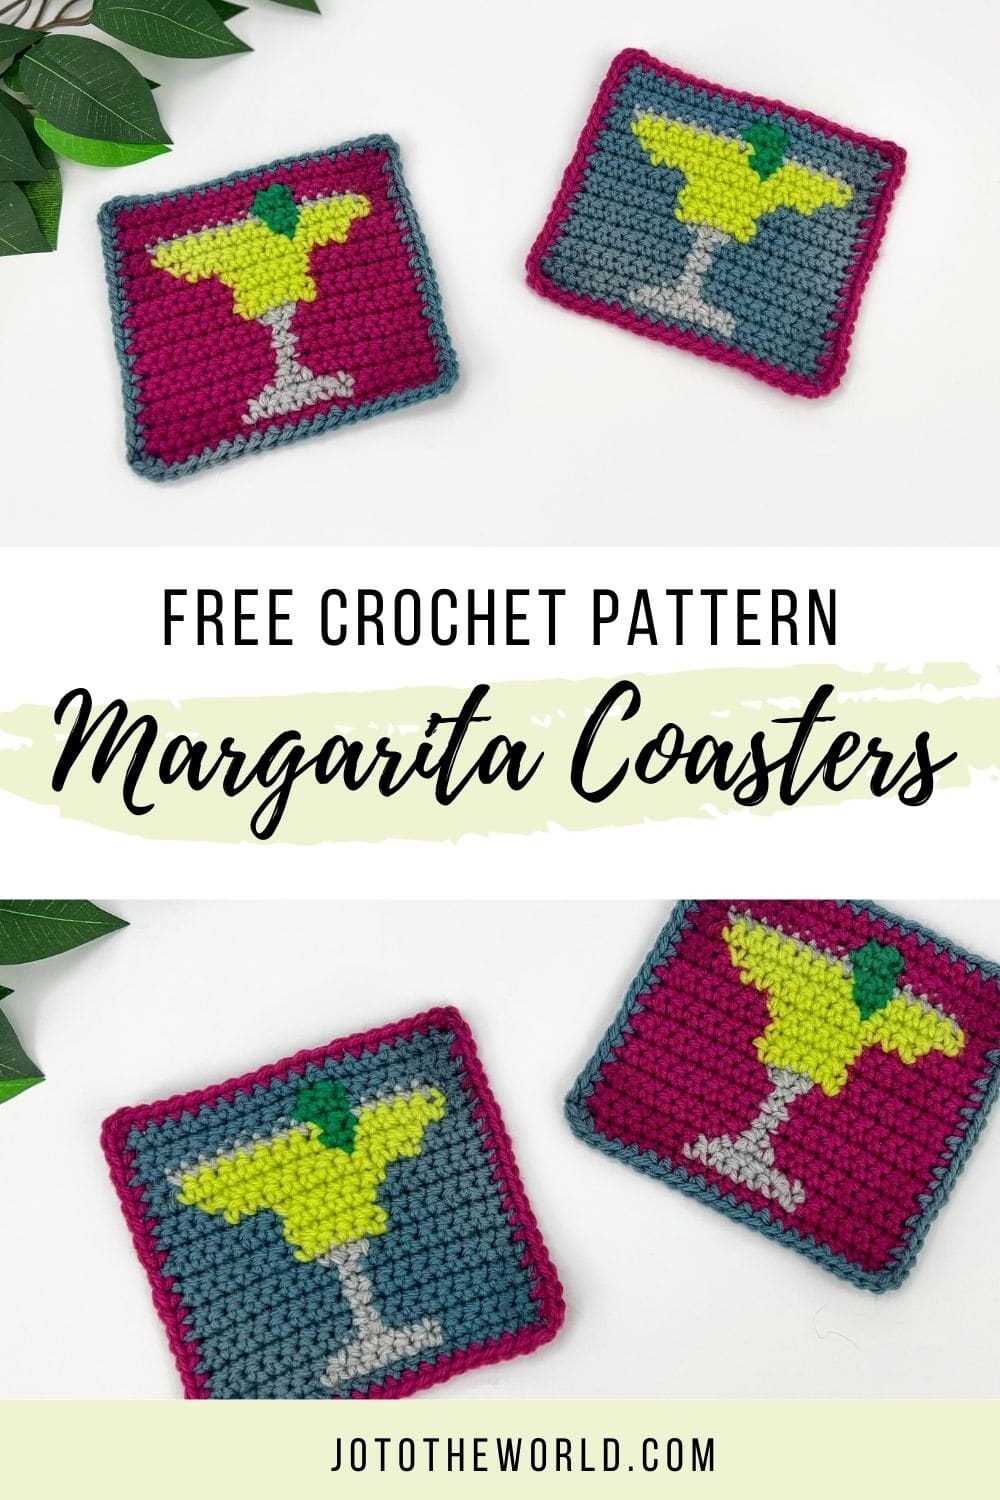 Crochet Coasters Free Pattern - Margarita